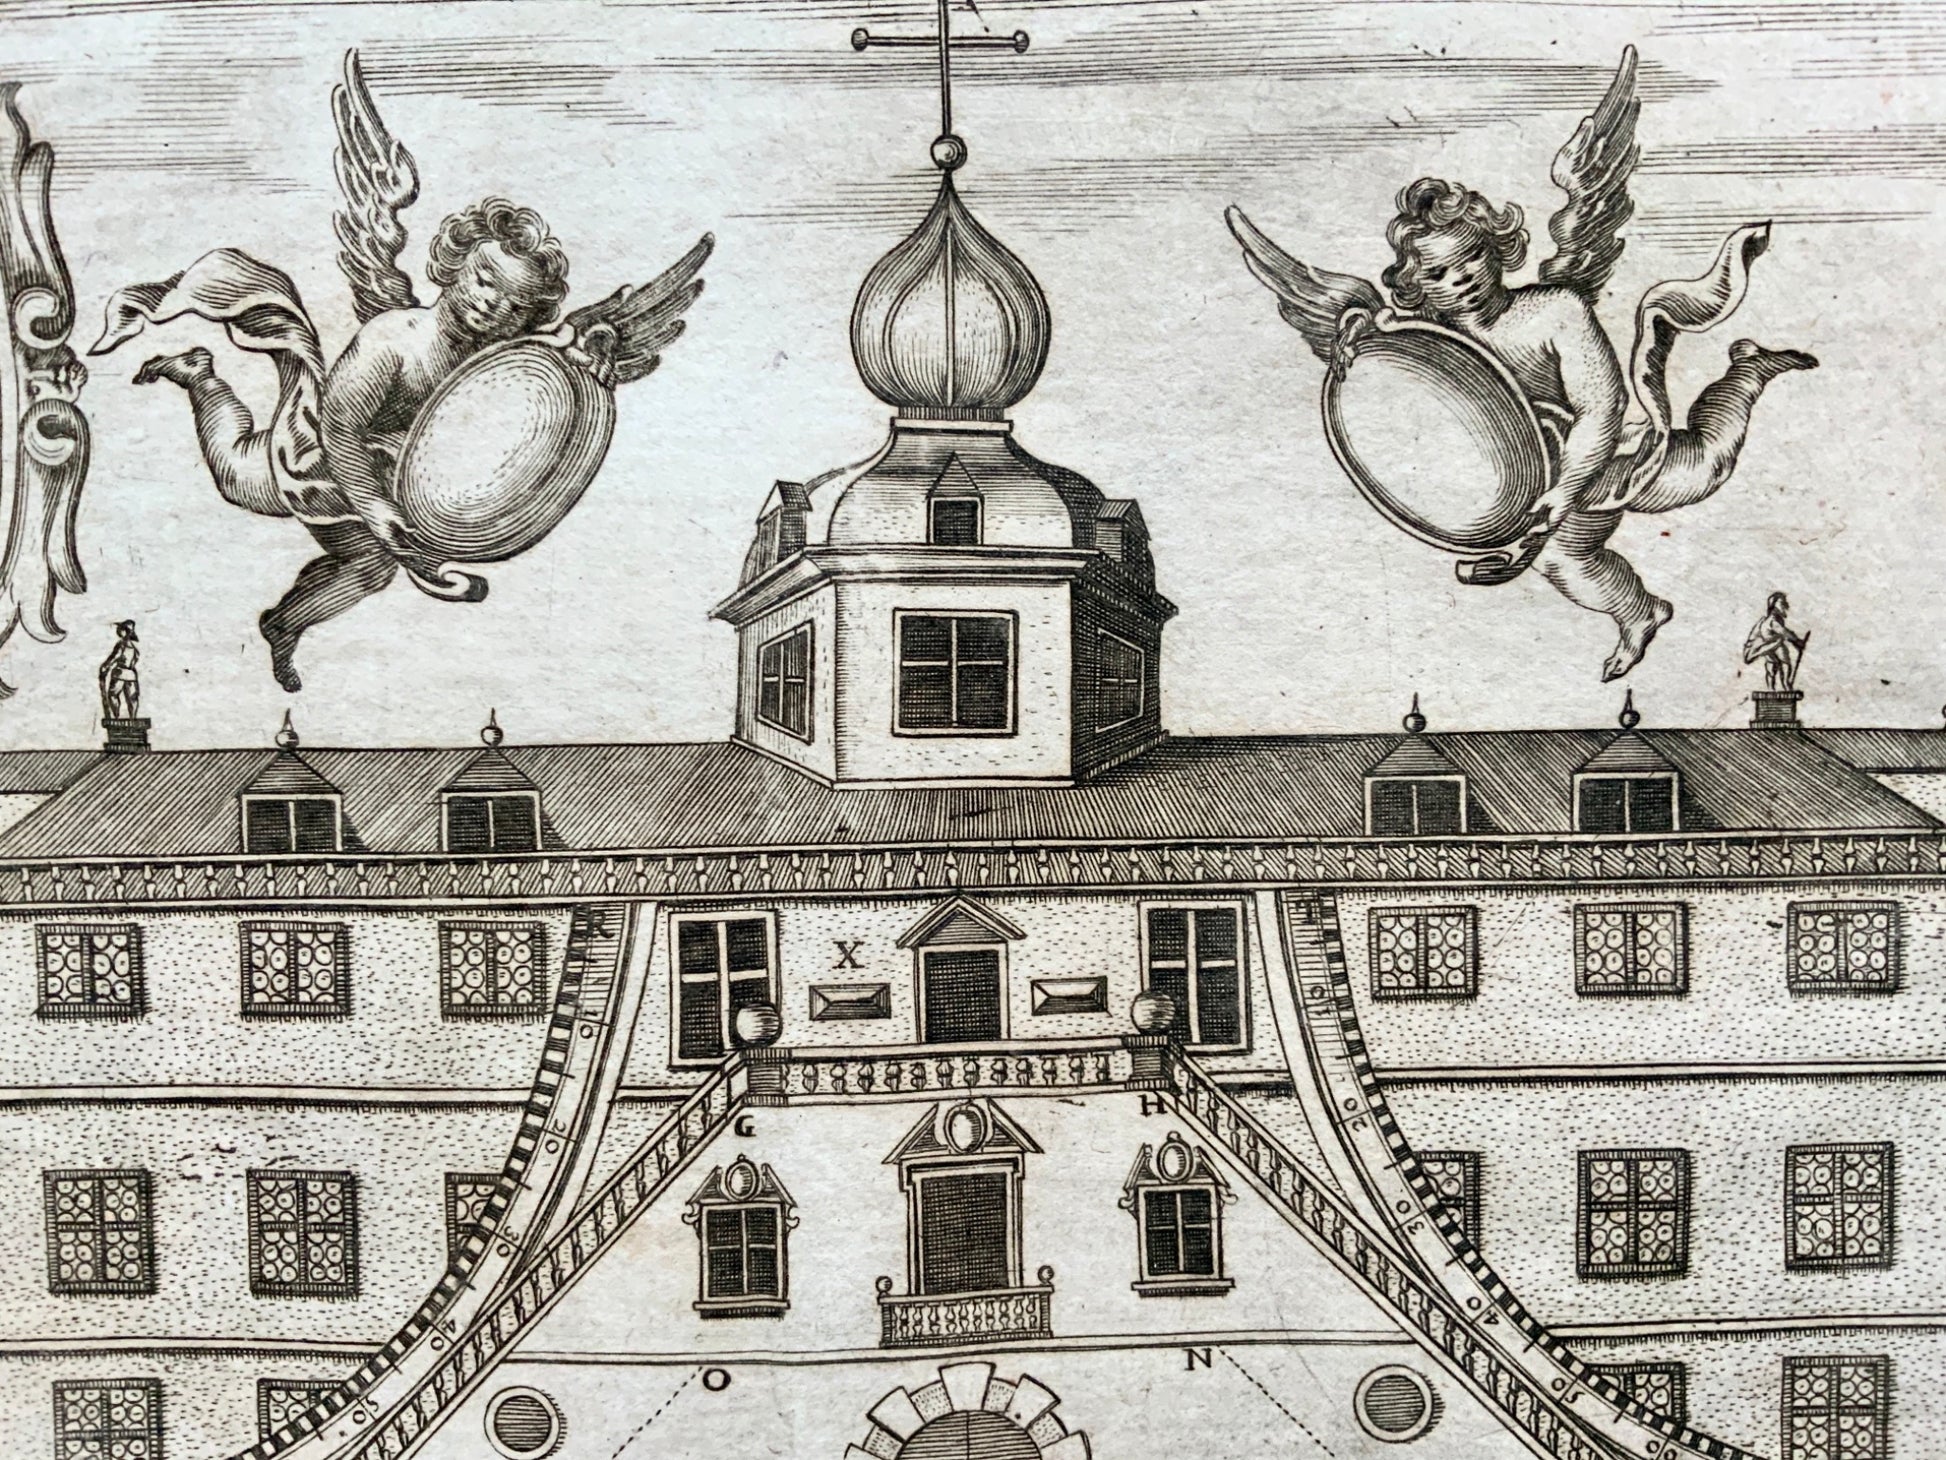 1678 Caramuel Lobkowitz (Juan) 1606-1682 OBLIQUE ARCHITECTURE geometrical beauty